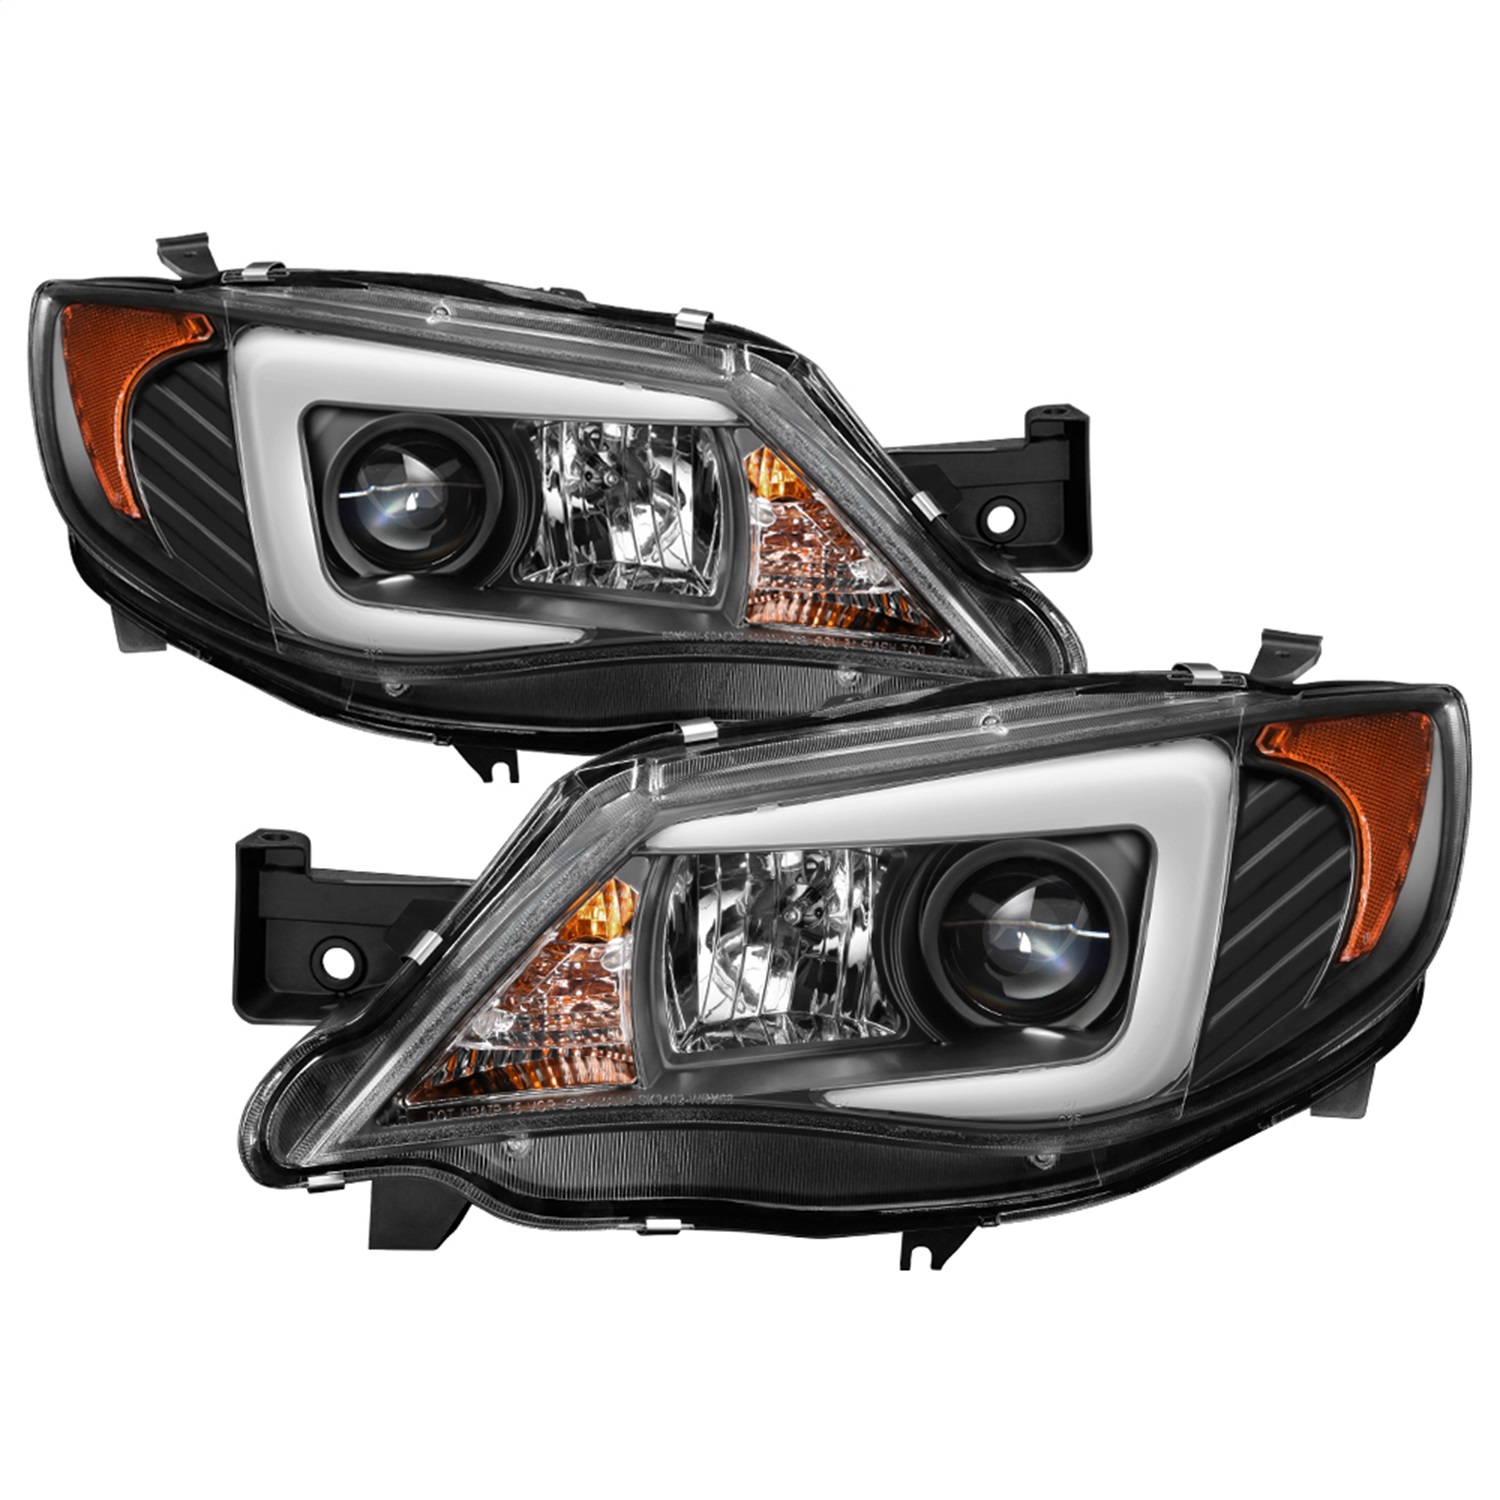 Spyder Auto 5083937 DRL LED Projector Headlights Fits 08-14 Impreza